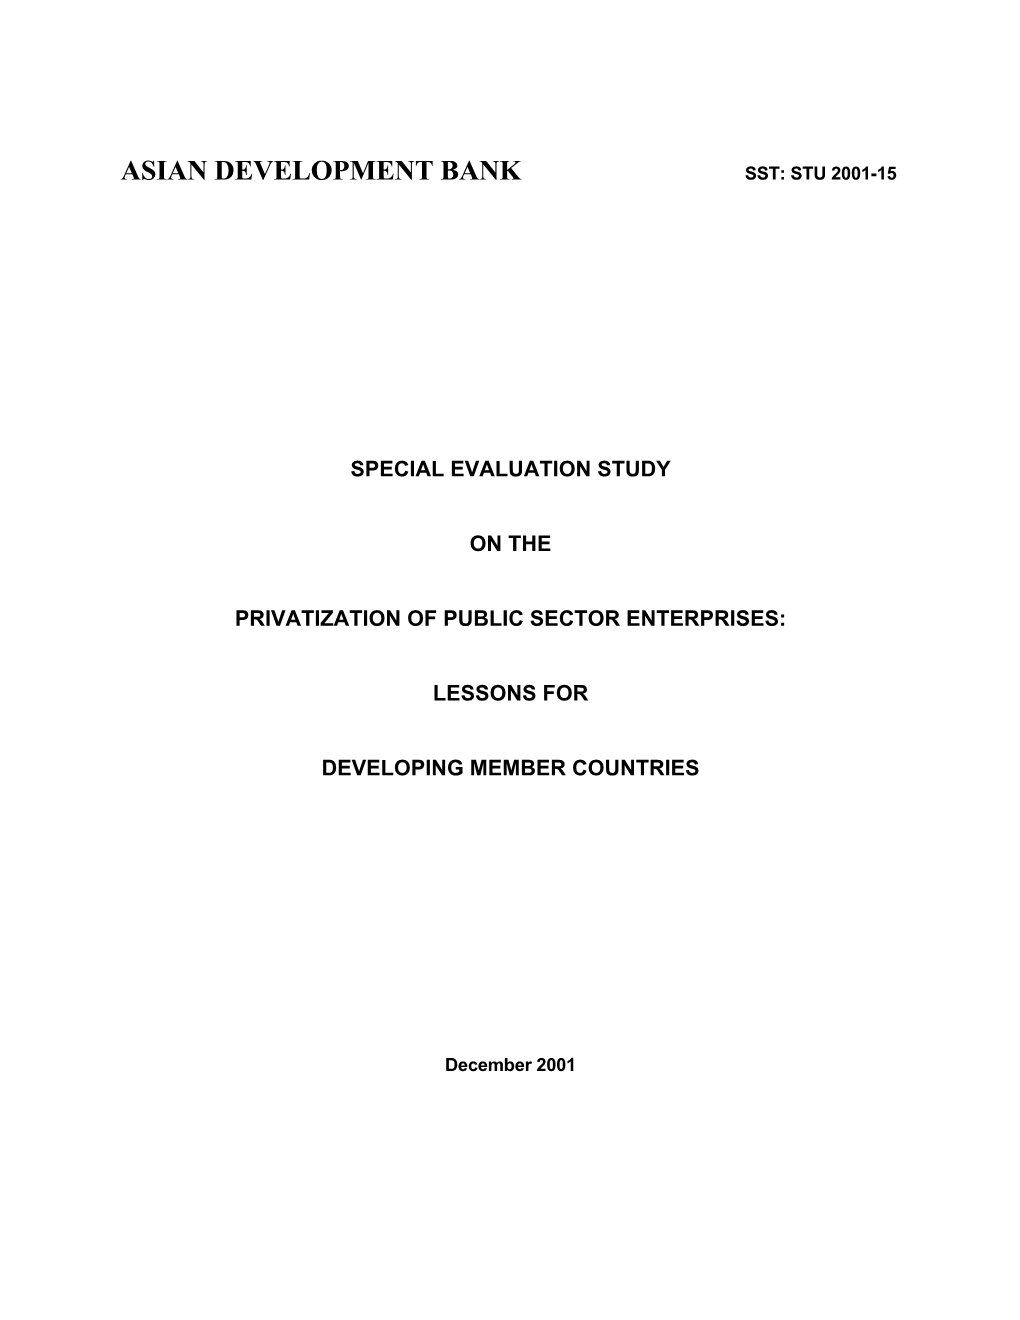 Asian Development Bank Sst: Stu 2001-15